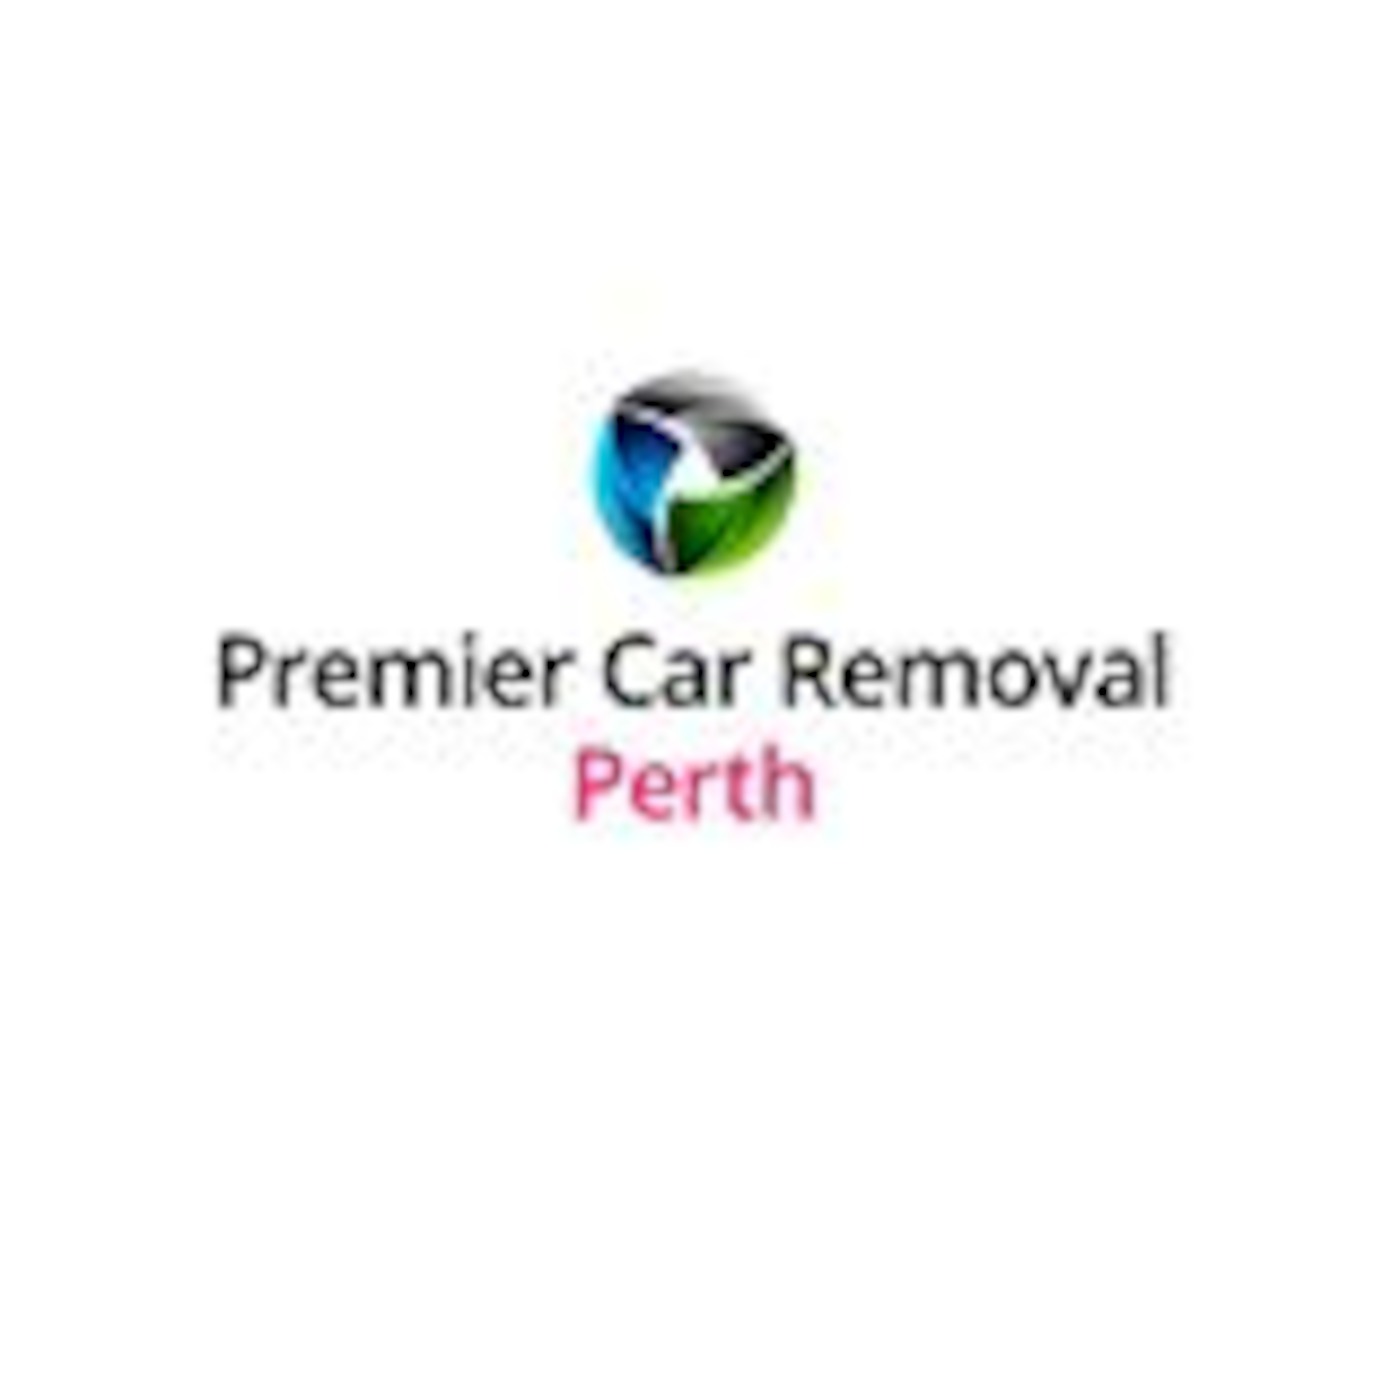 Premier Car Removal Perth